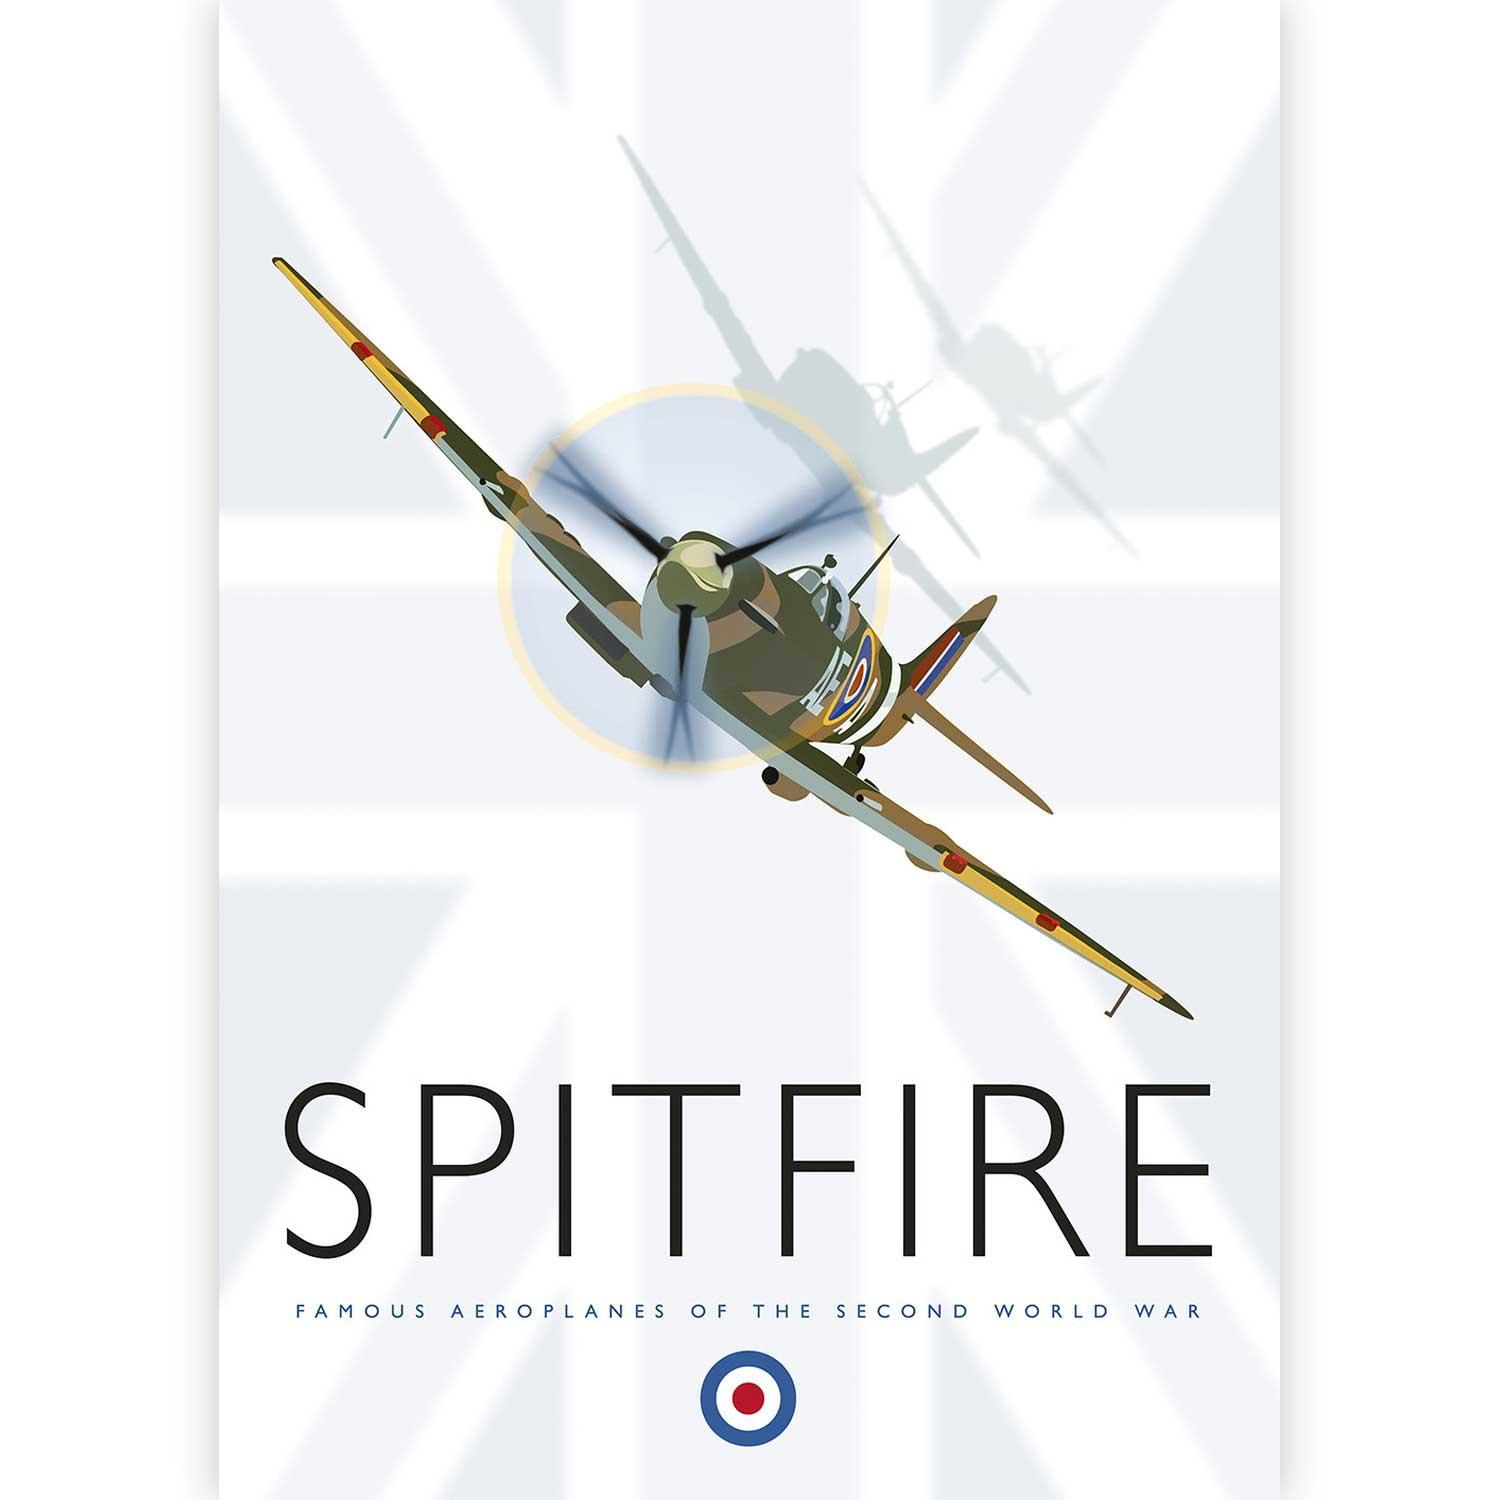 Spitfire by Peter McDermott